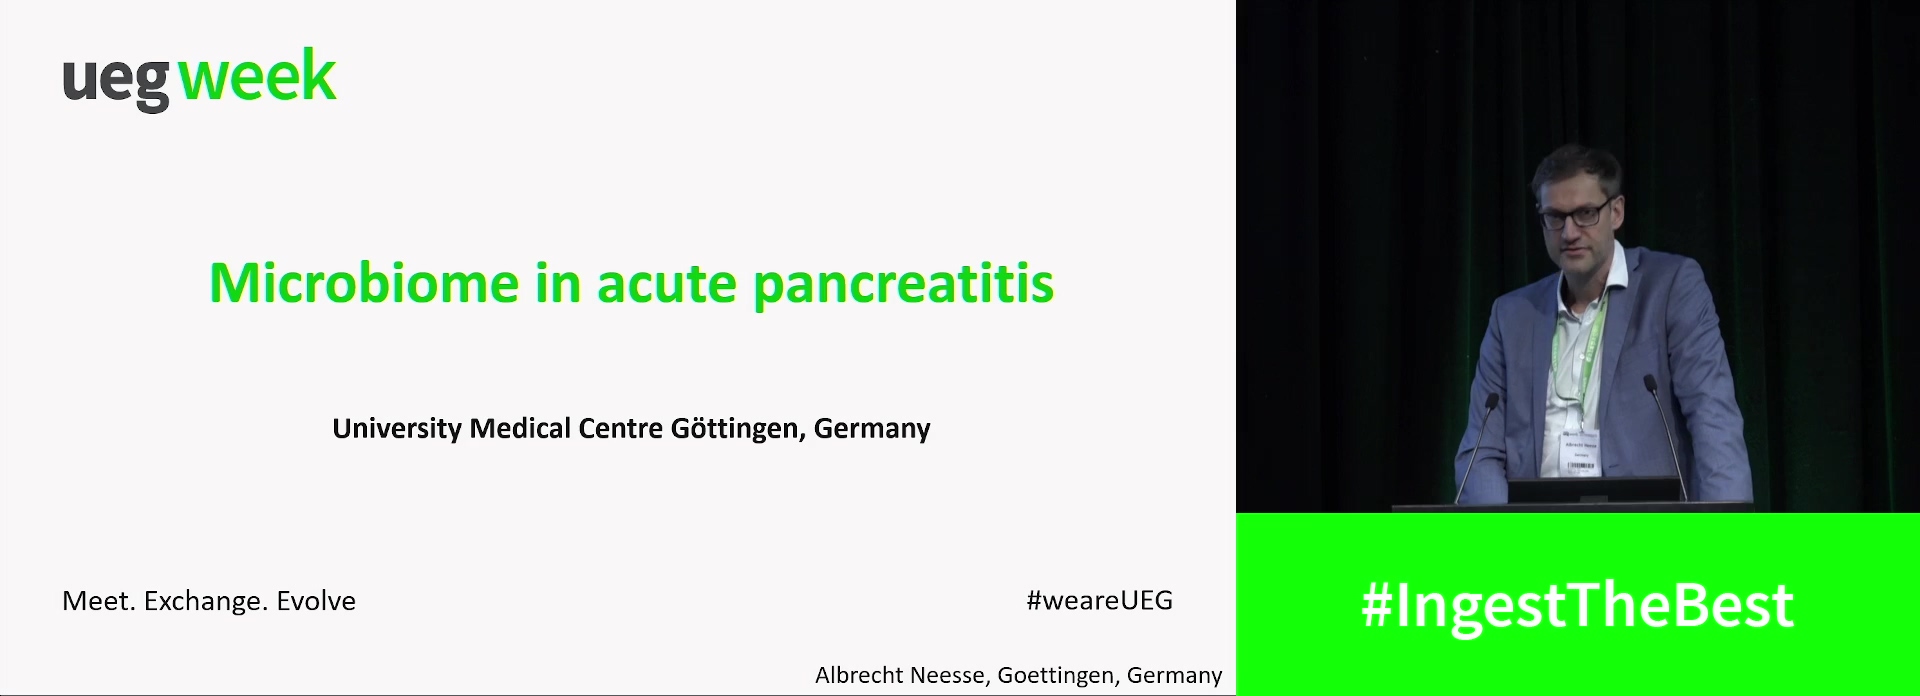 Microbiome in acute pancreatitis